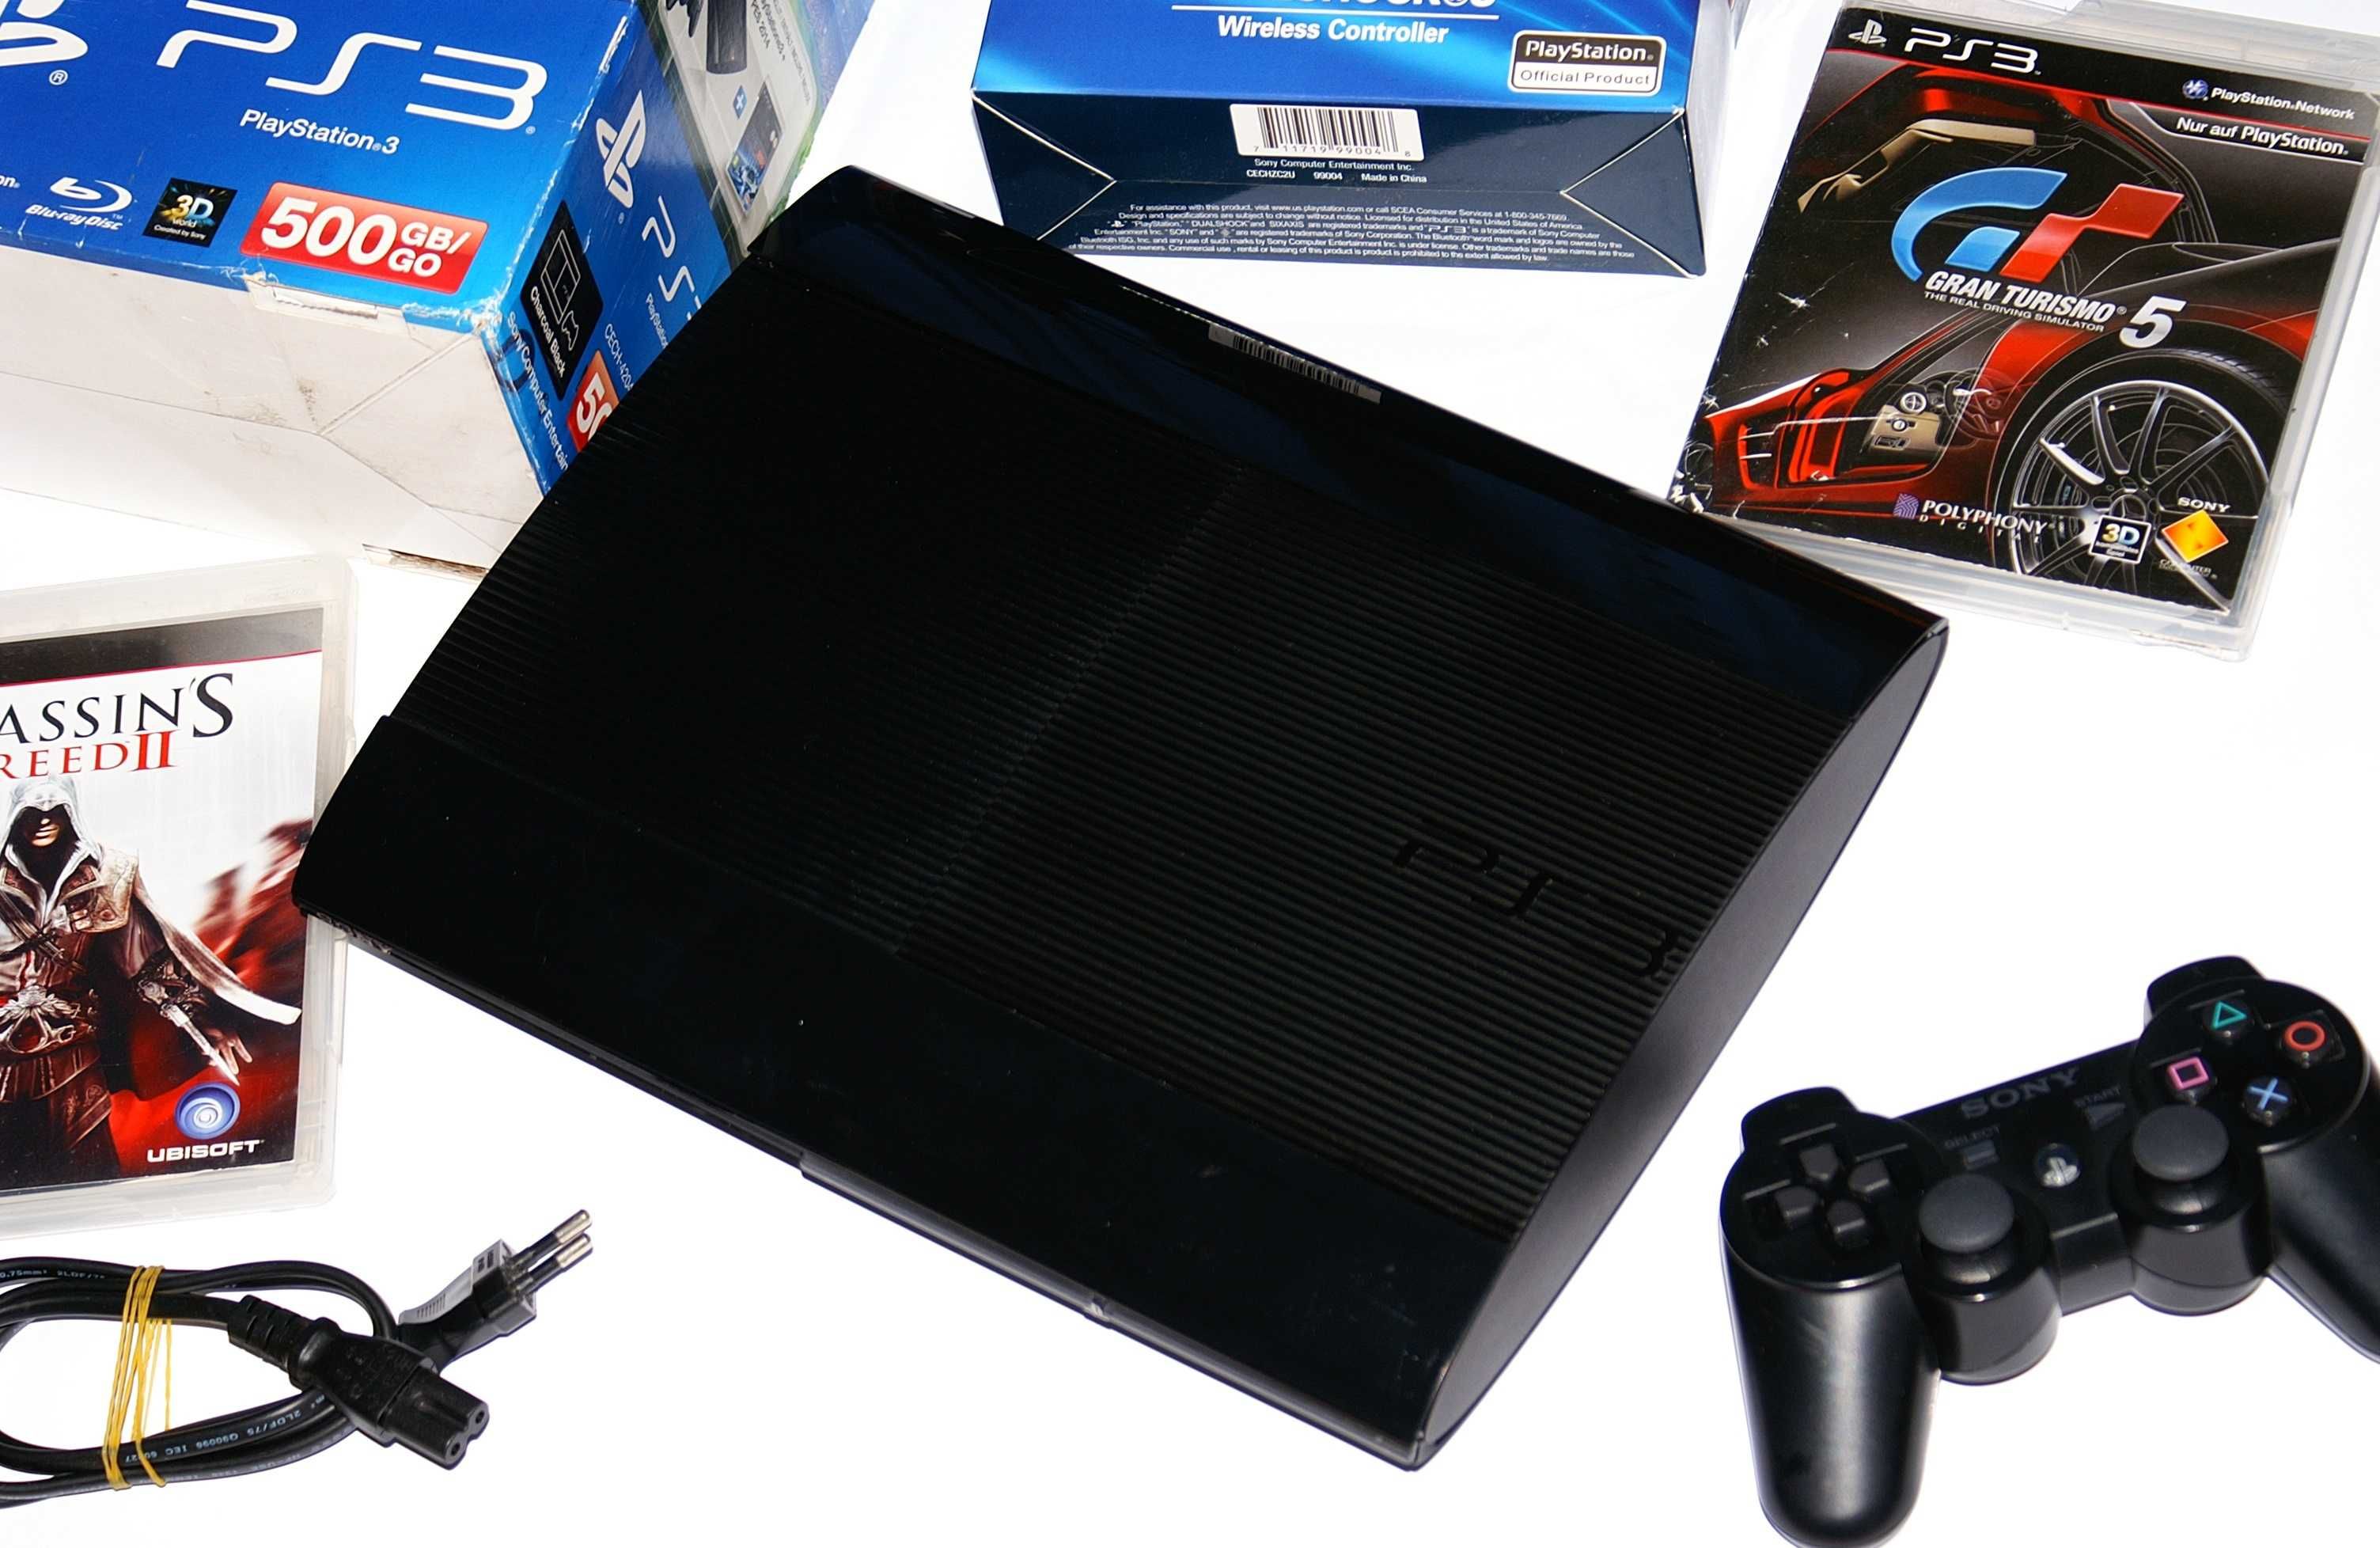 PS3 500GB PlayStation Плейстейшън 3 ПС3 с кутия, два конролера и игри